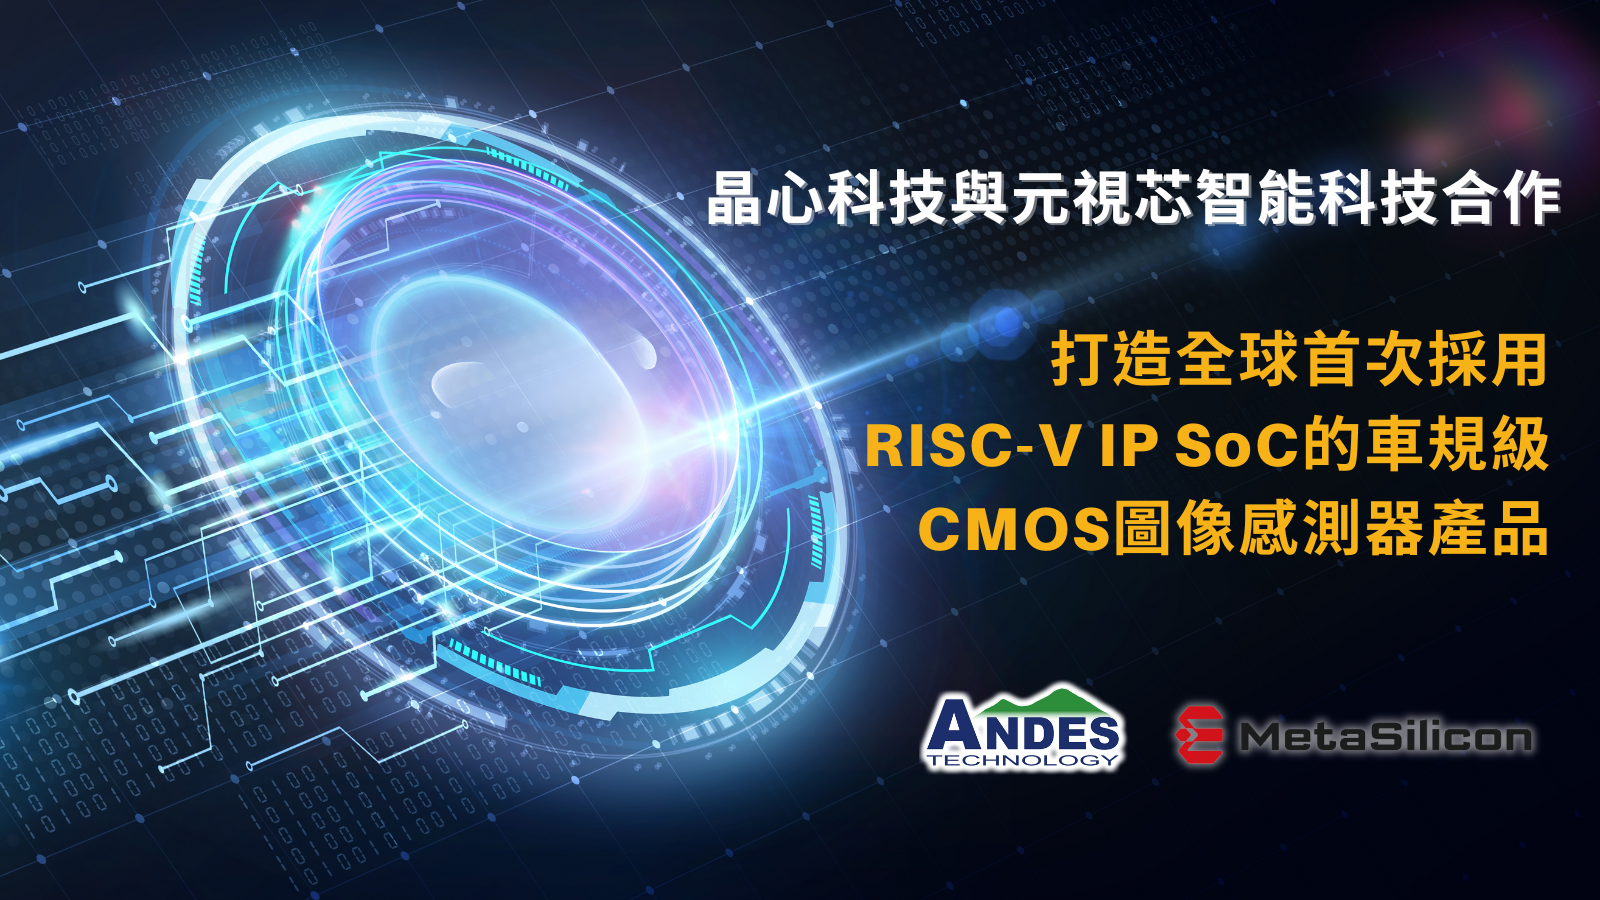 Read more about the article 晶心科技與元視芯智能科技合作打造全球首次採用RISC-V IP SoC的車規級CMOS圖像感測器產品